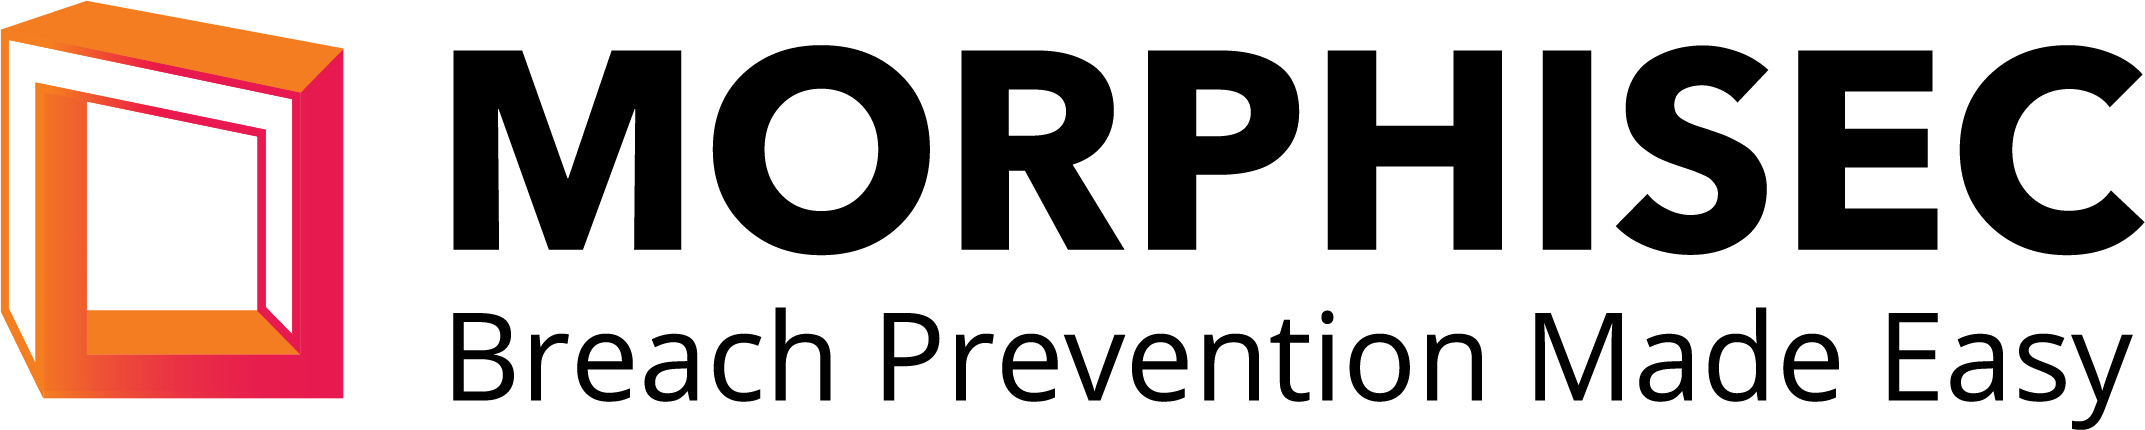 Morphisec logo